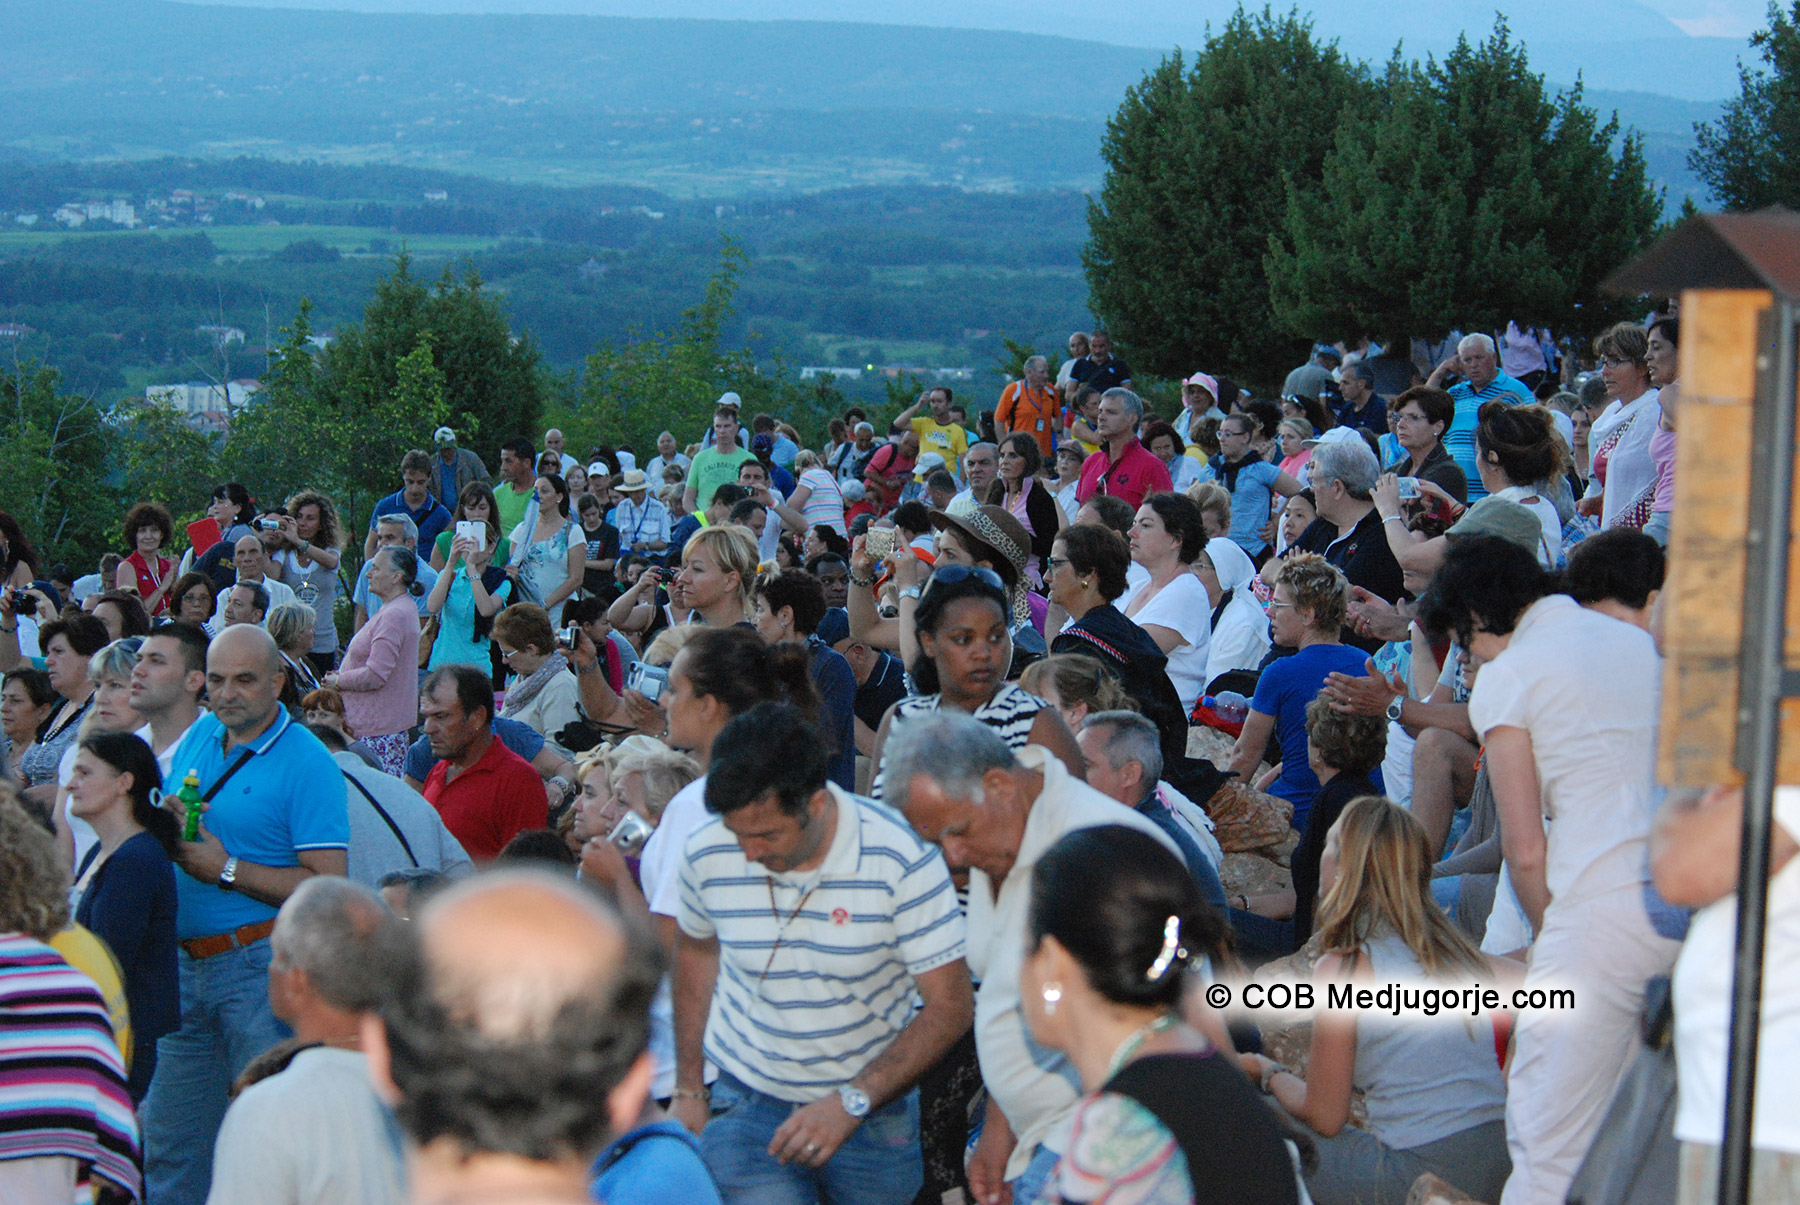 Pilgrims in Medjugorje June 24, 2013